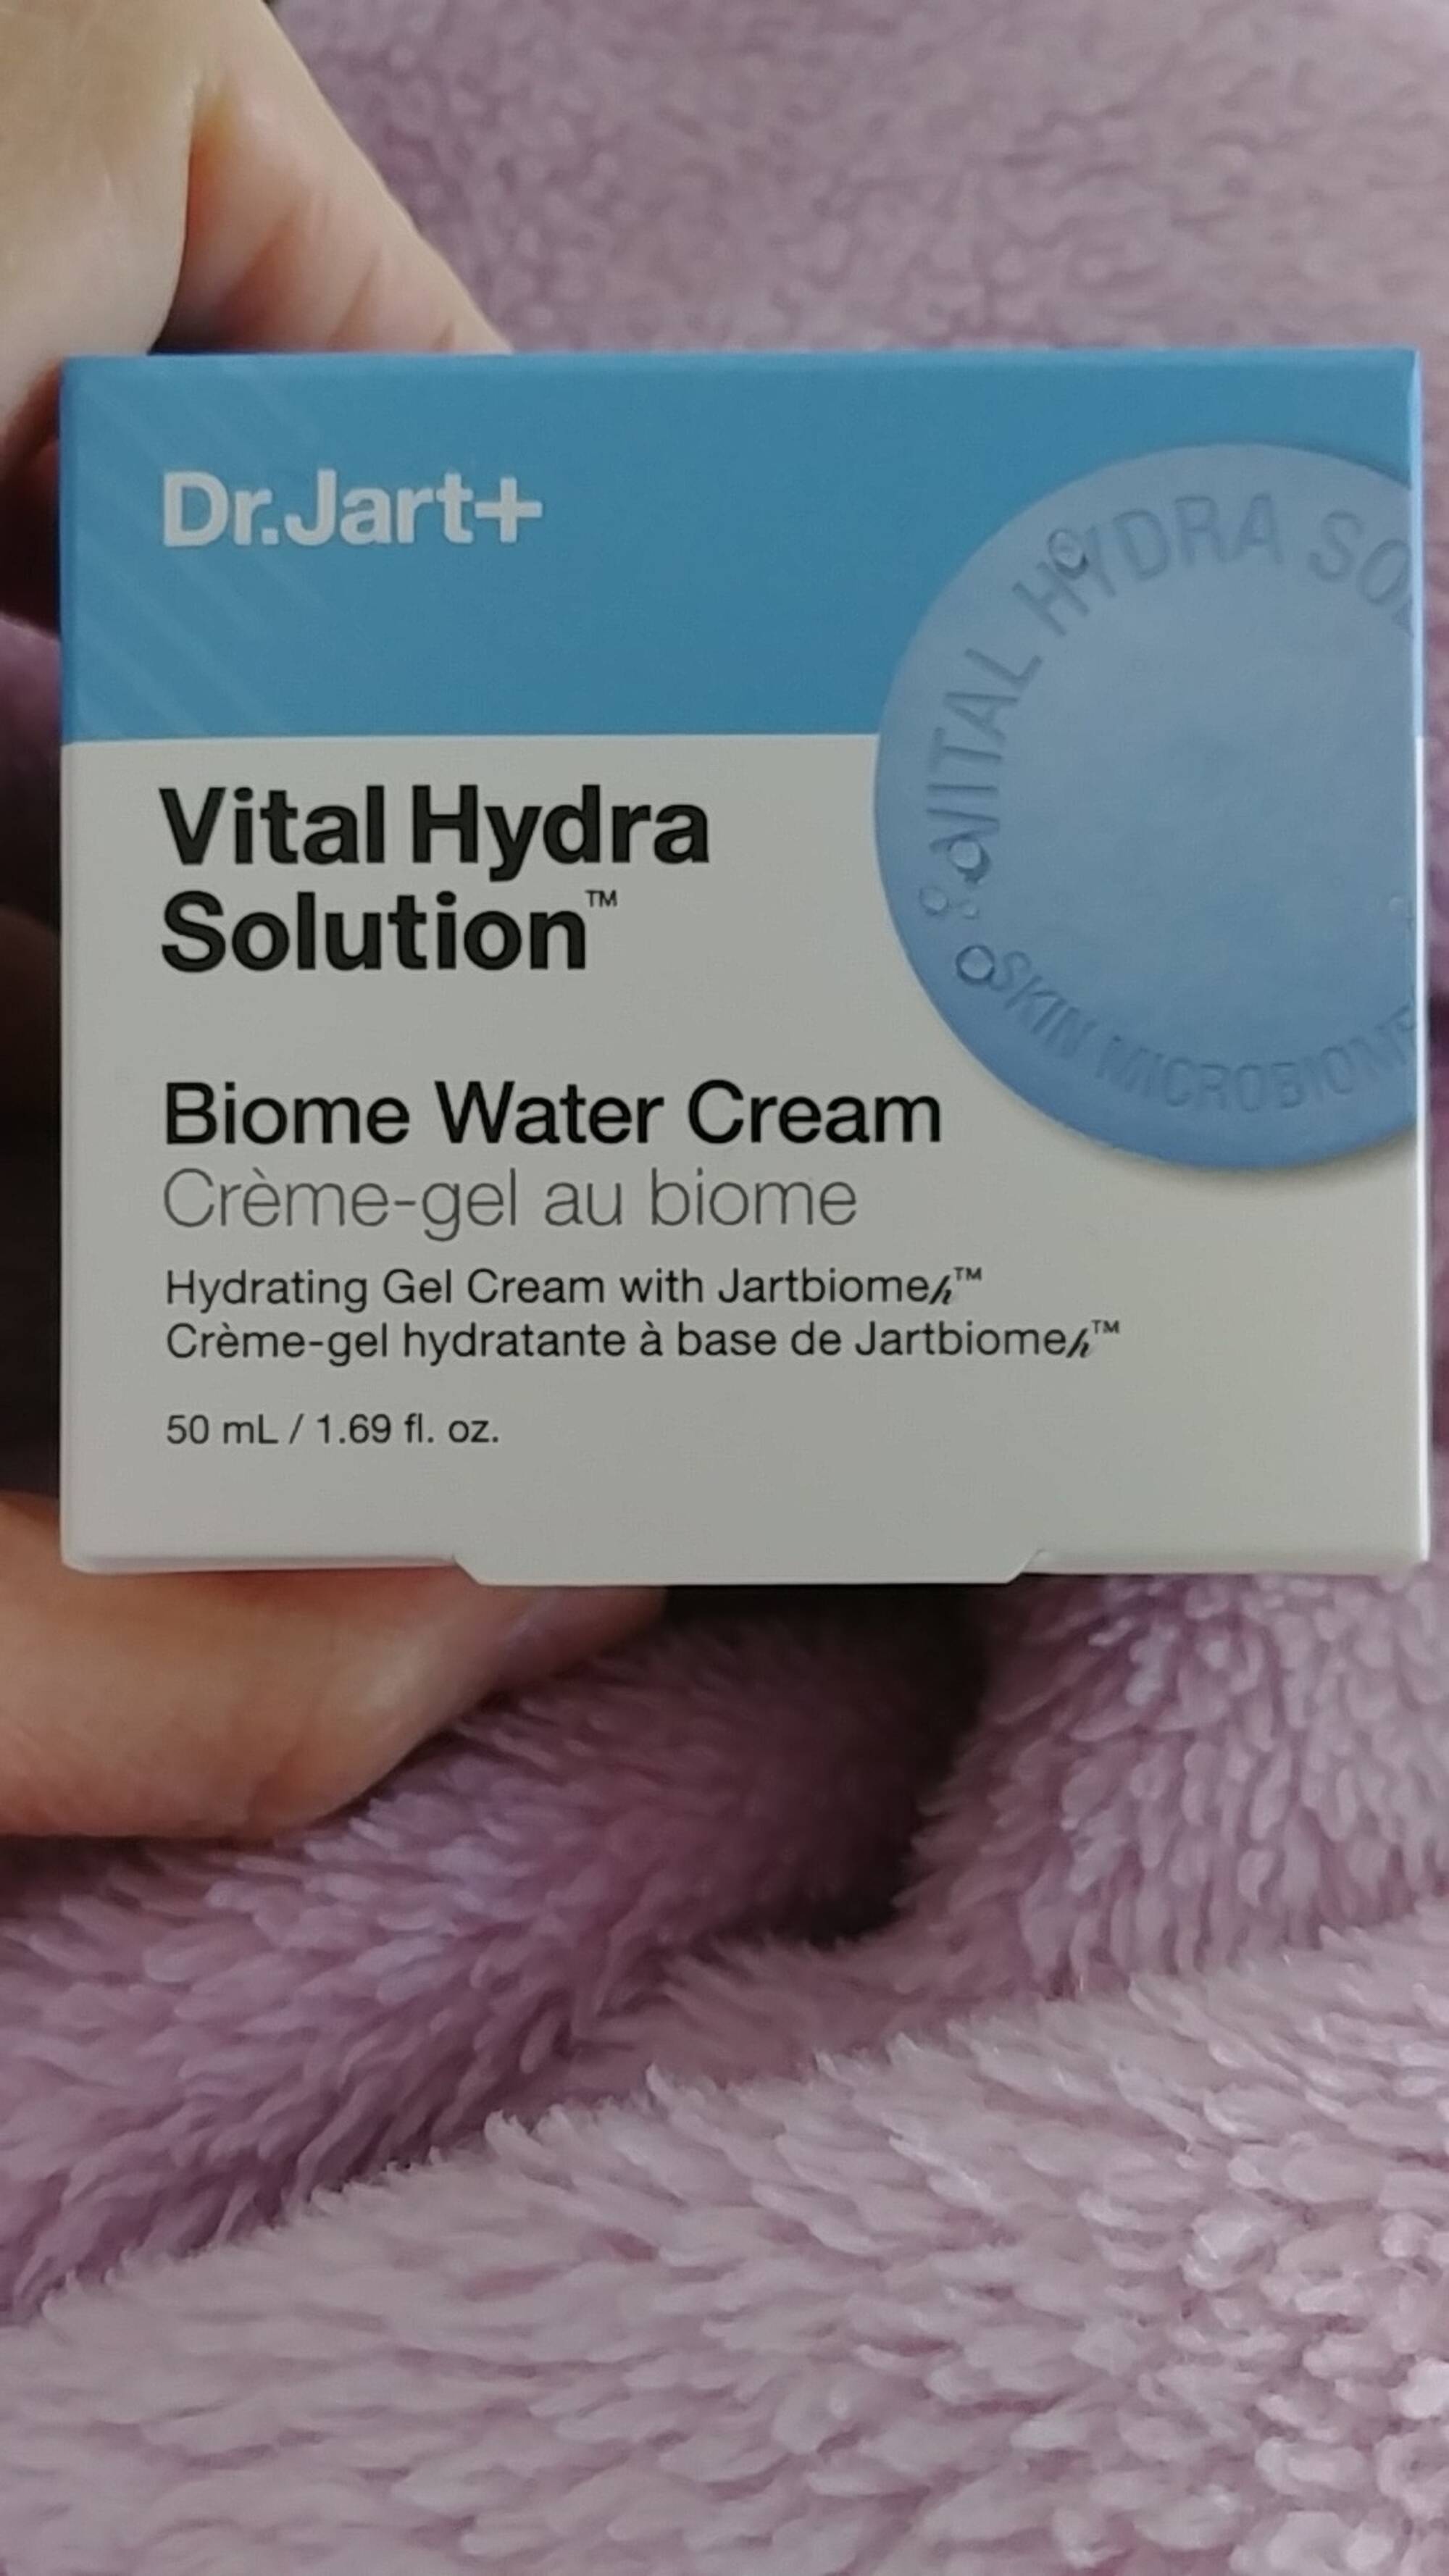 DR.JART+ - Vital hydra solution - Crème-gel au biome